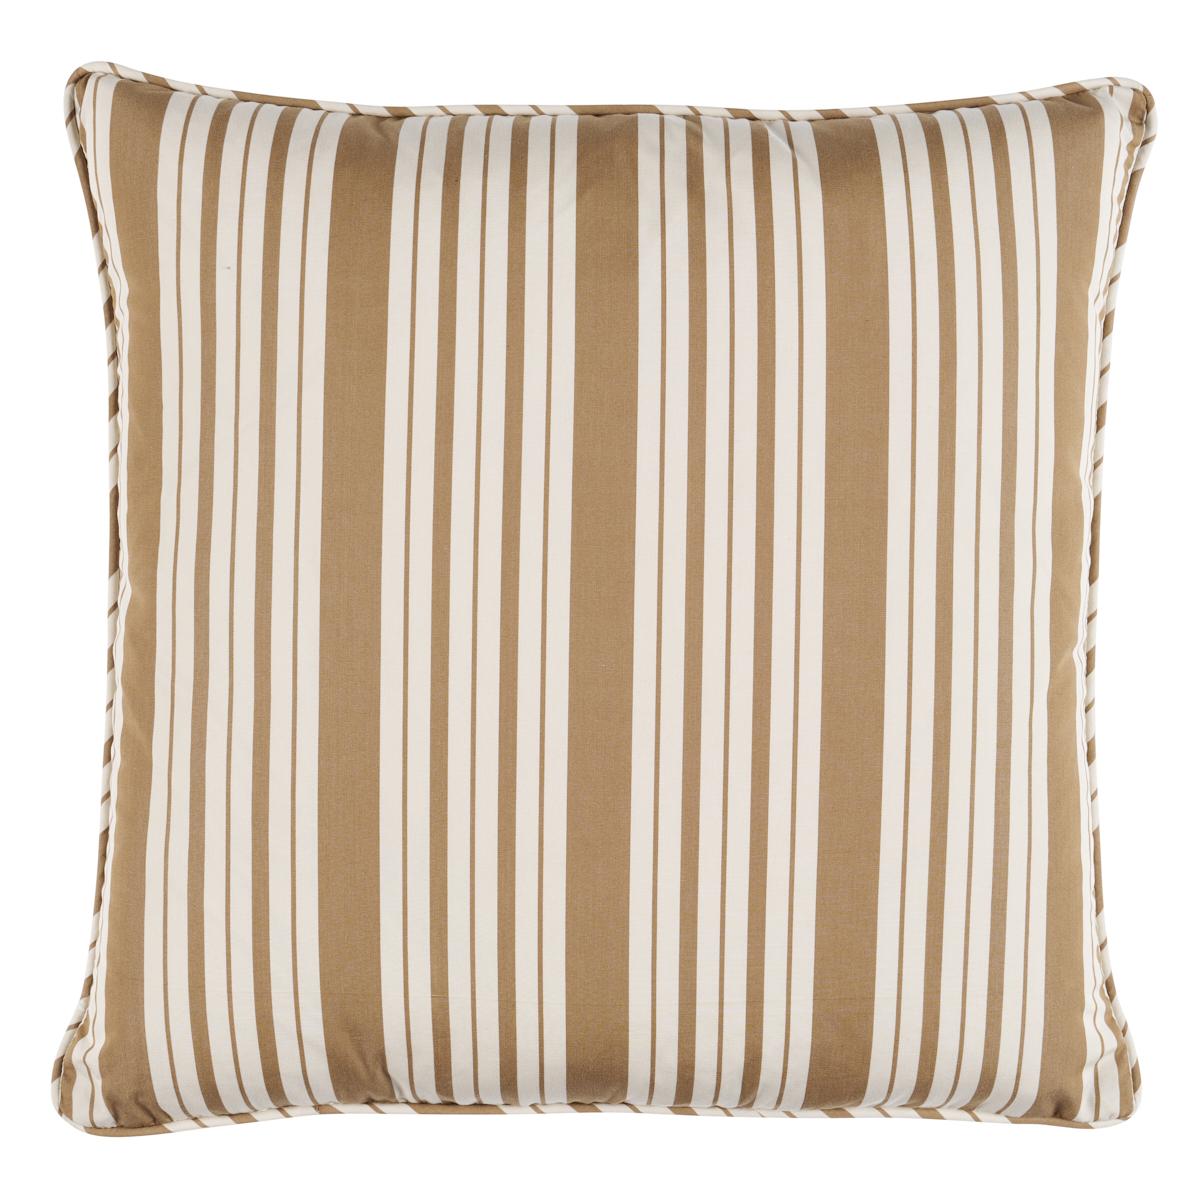 Markie Stripe Pillow in Neutral 20 x 20" For Sale